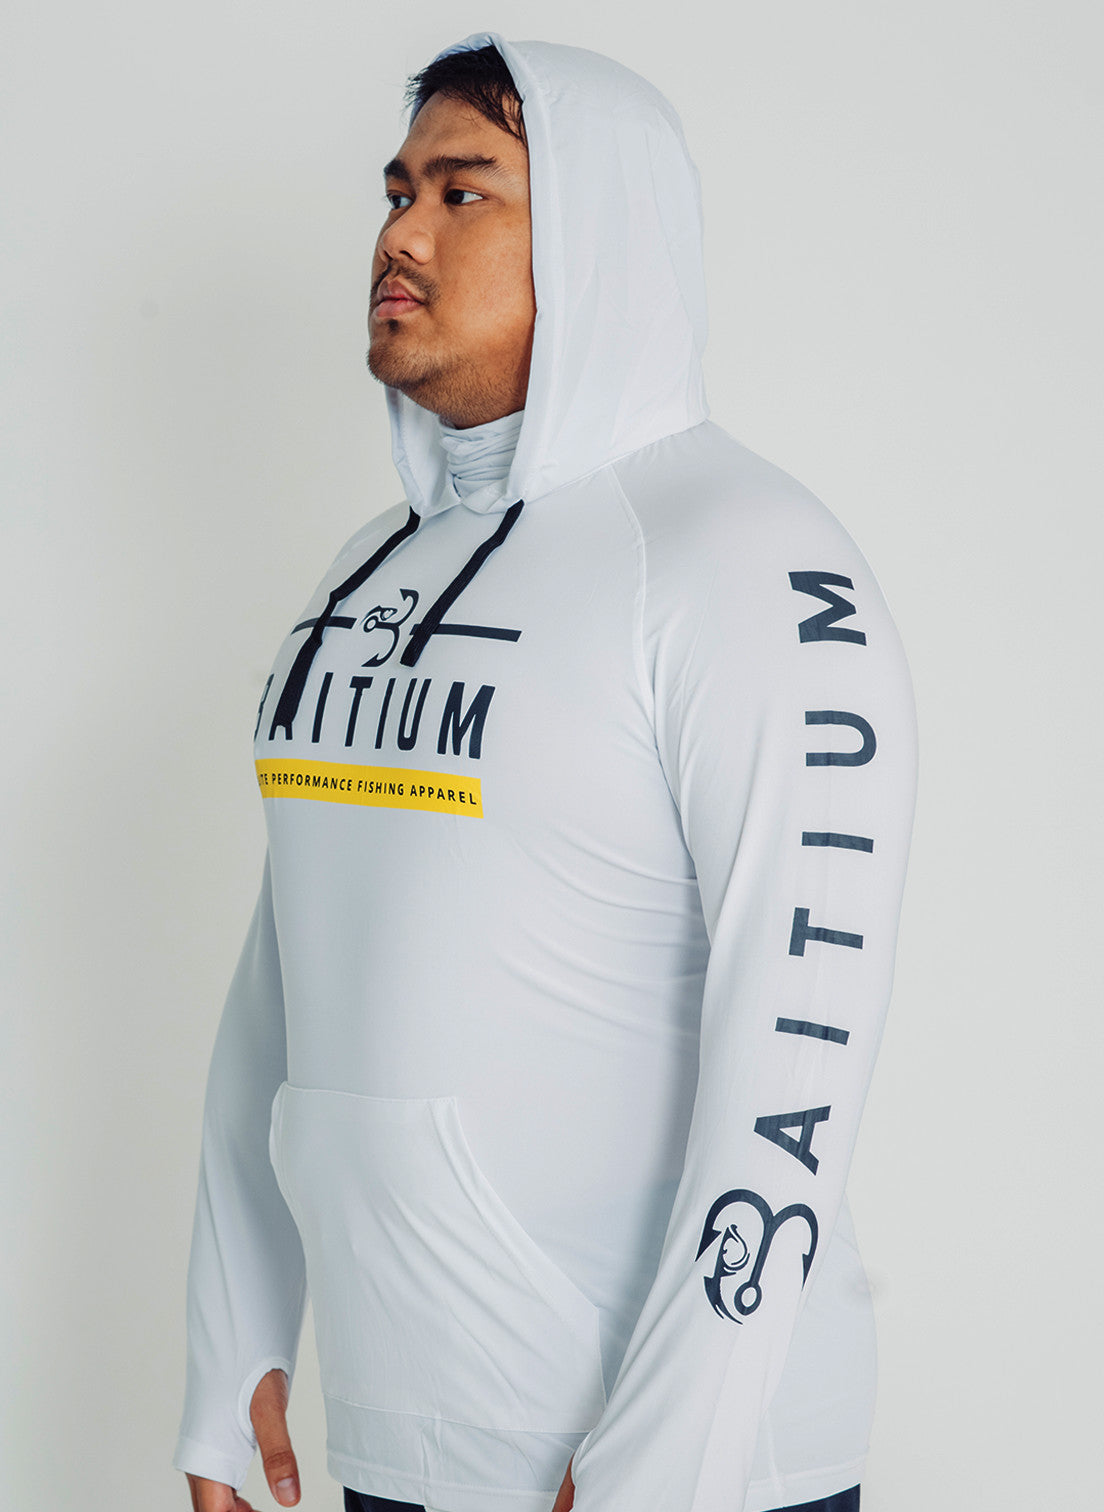 Baitium Original Hooded UPF 50+ Long Sleeves